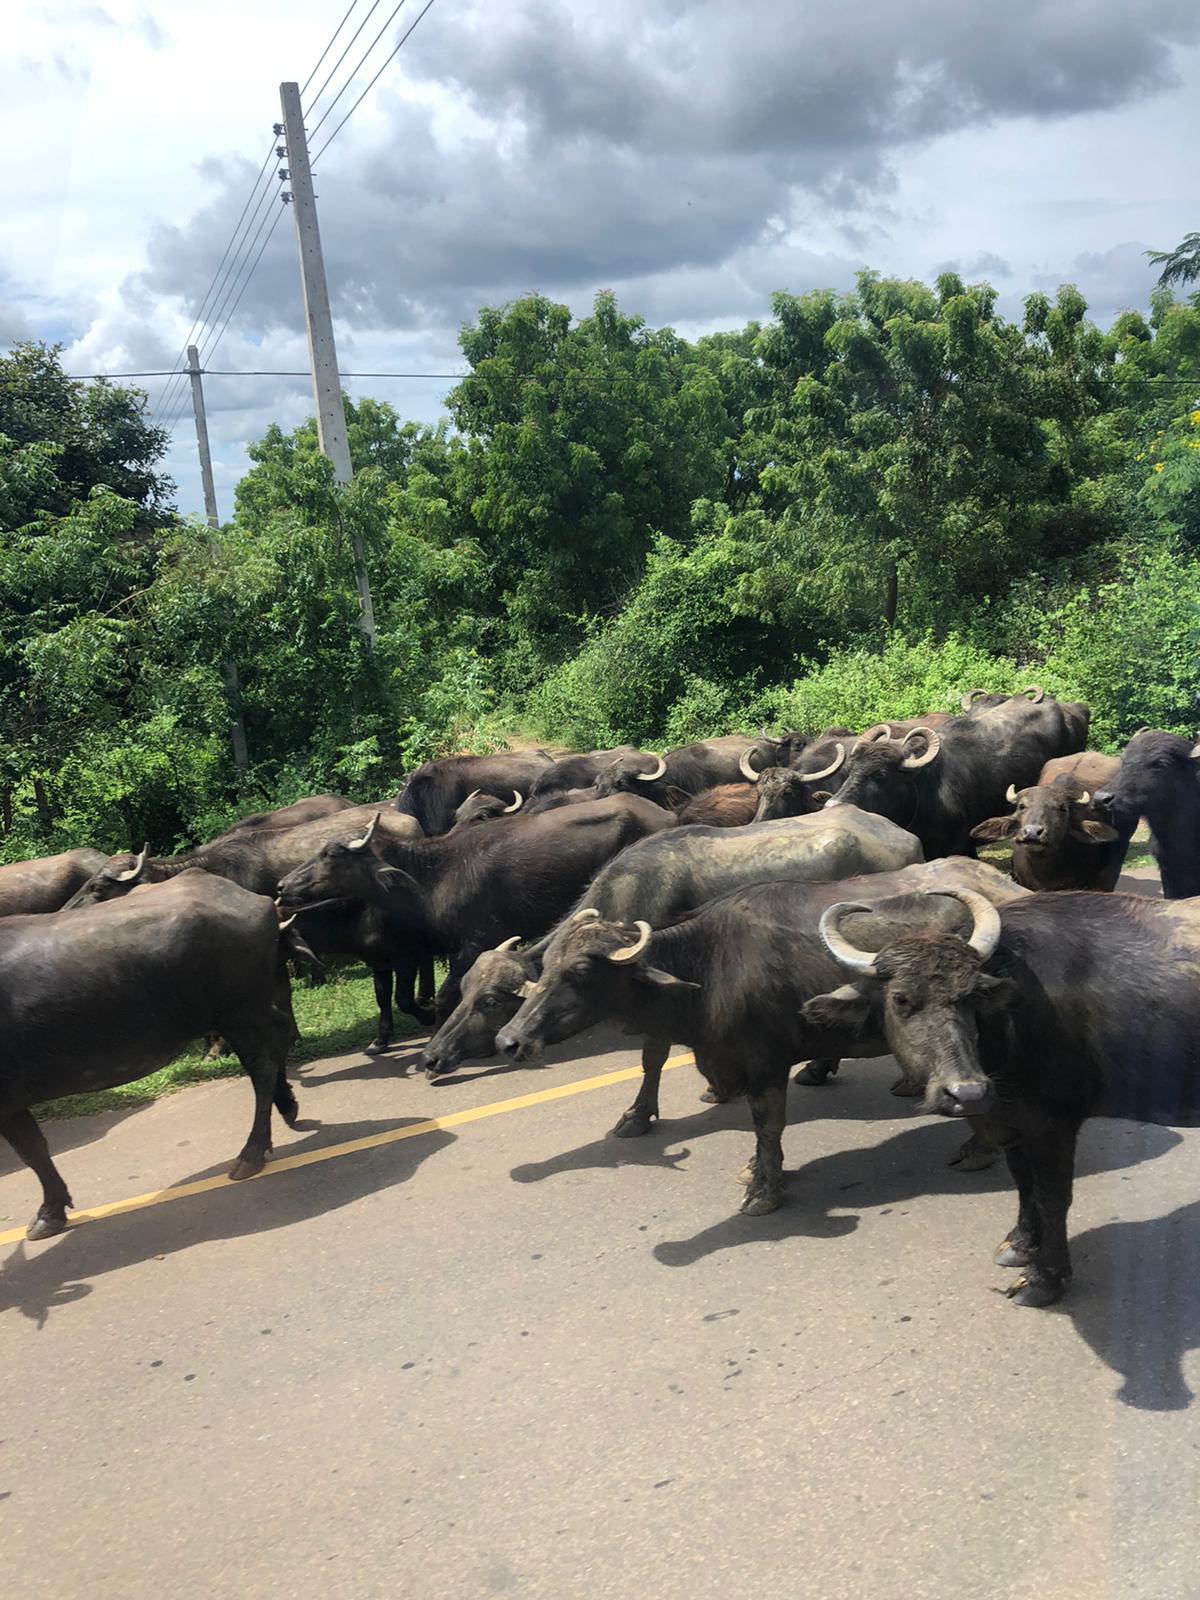 A traffic jam in Sri Lanka 